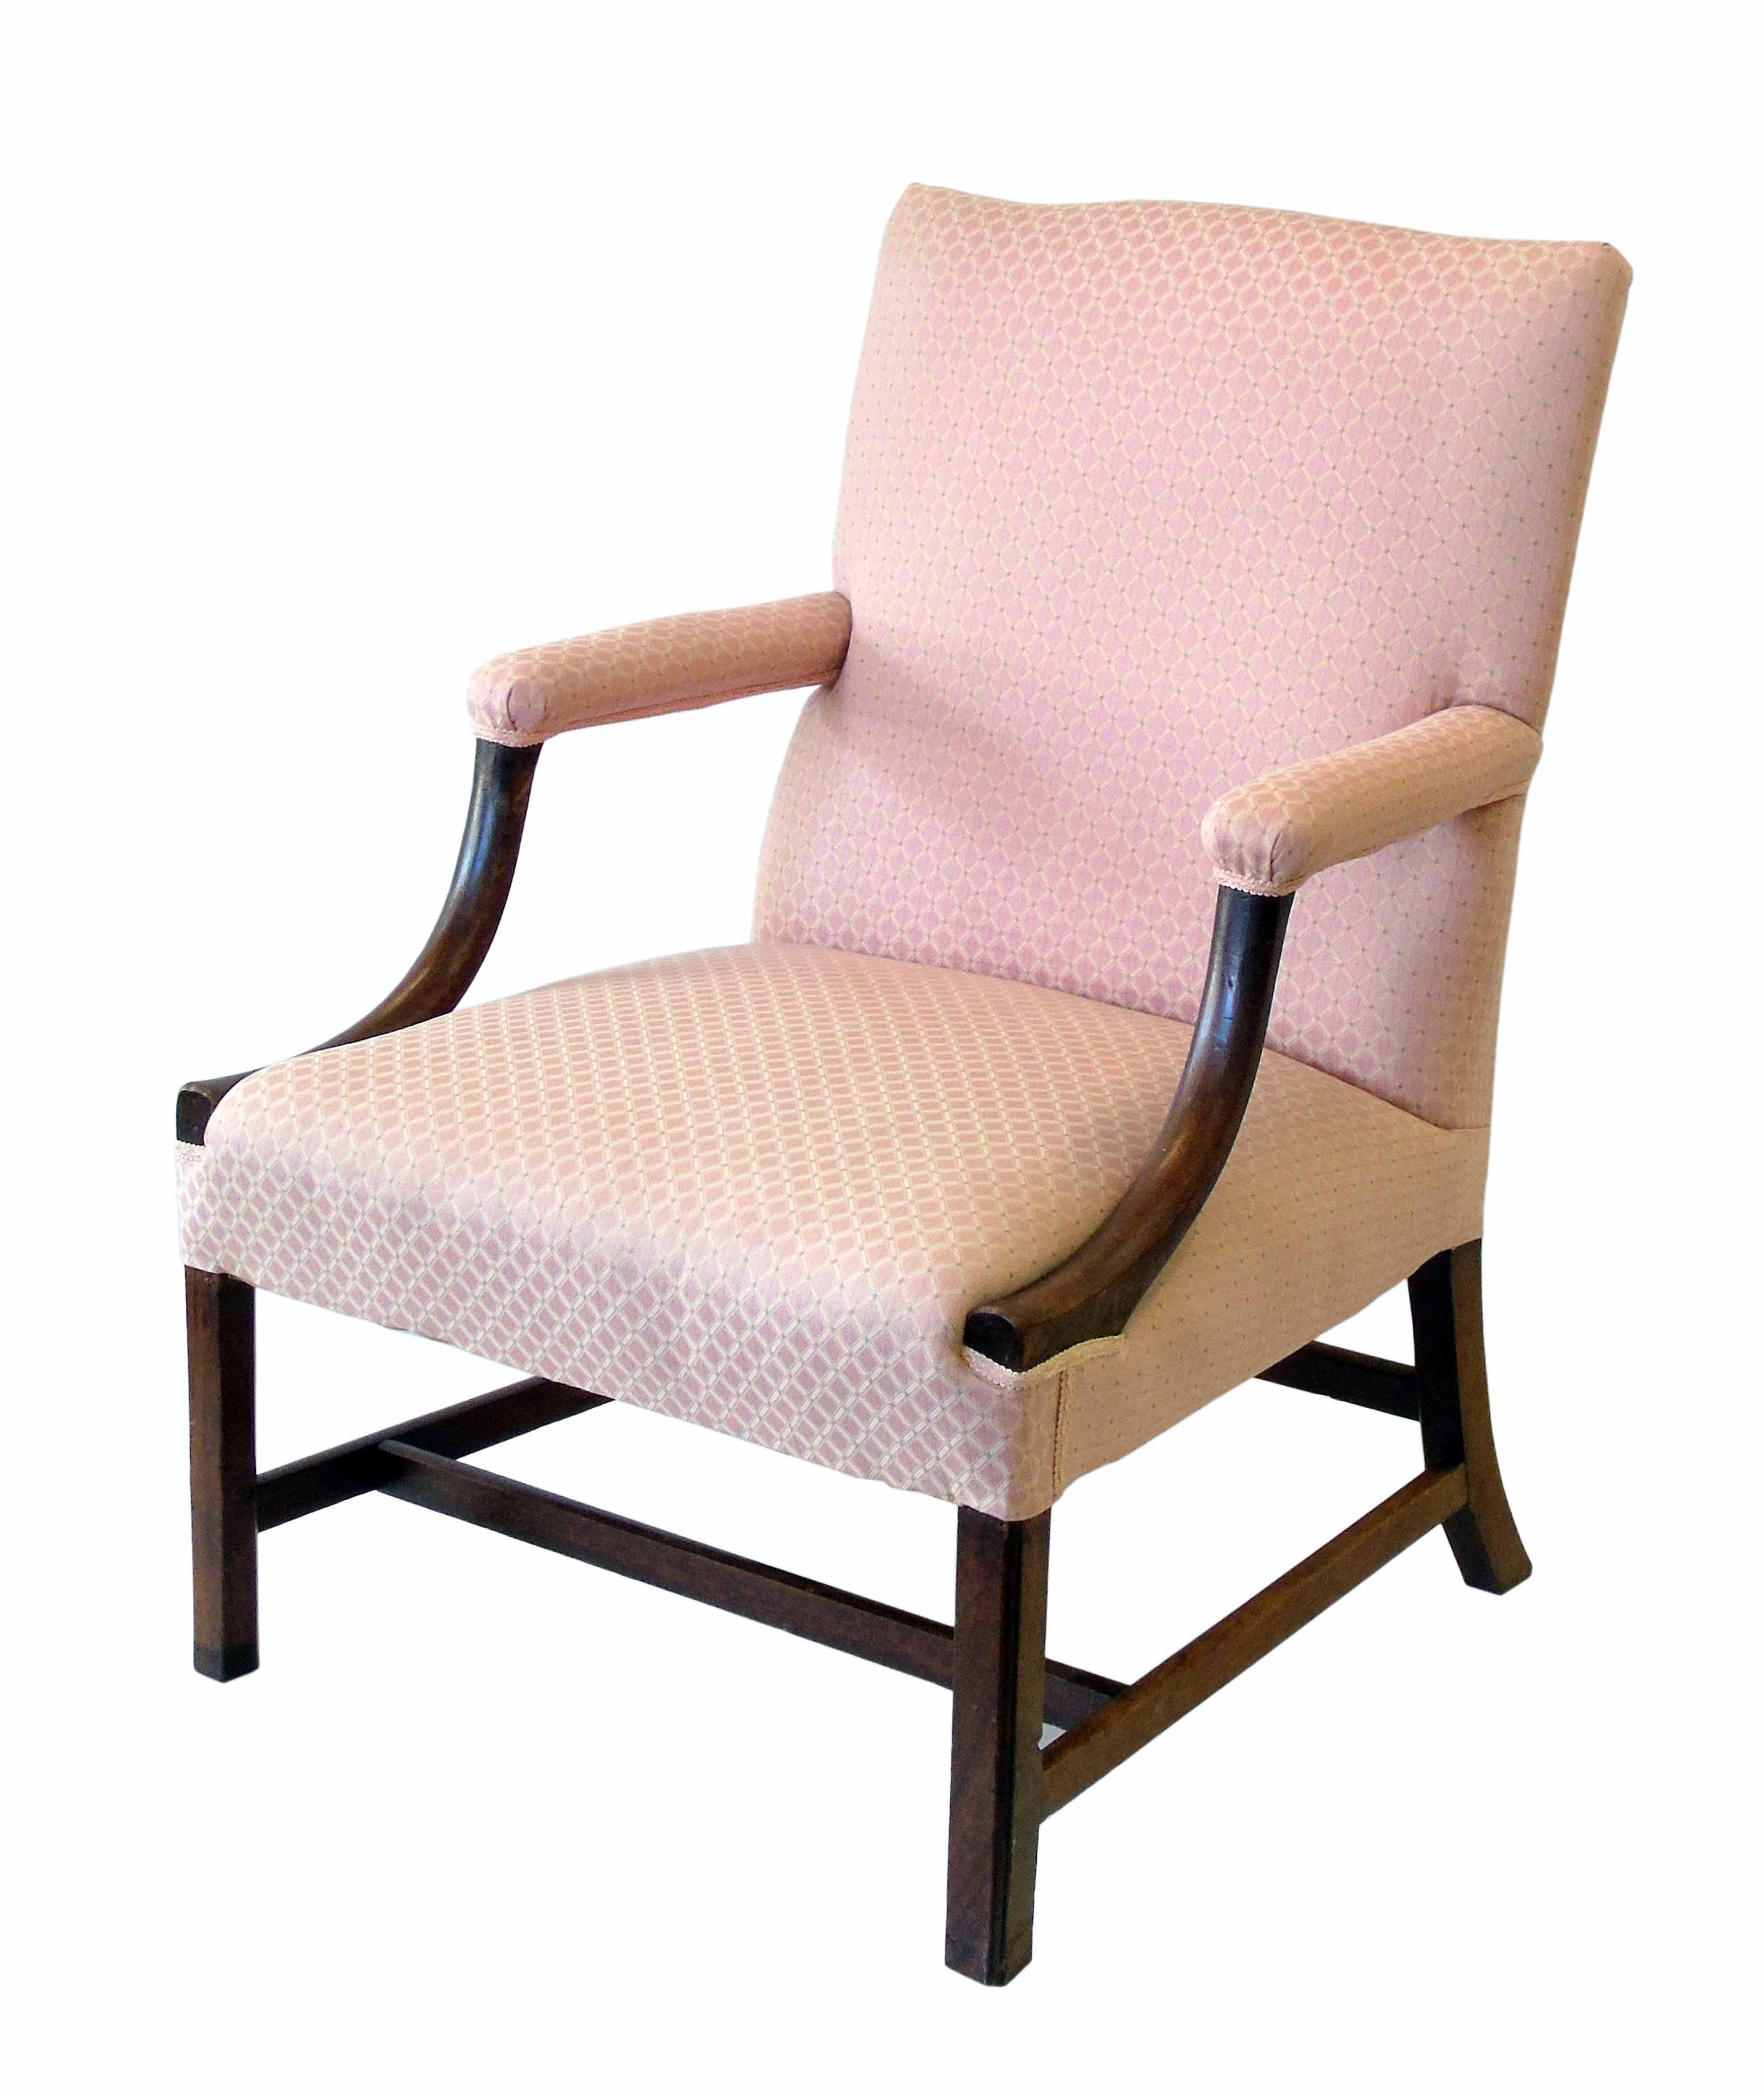 Early 19th century mahogany framed Gainsborough chair.